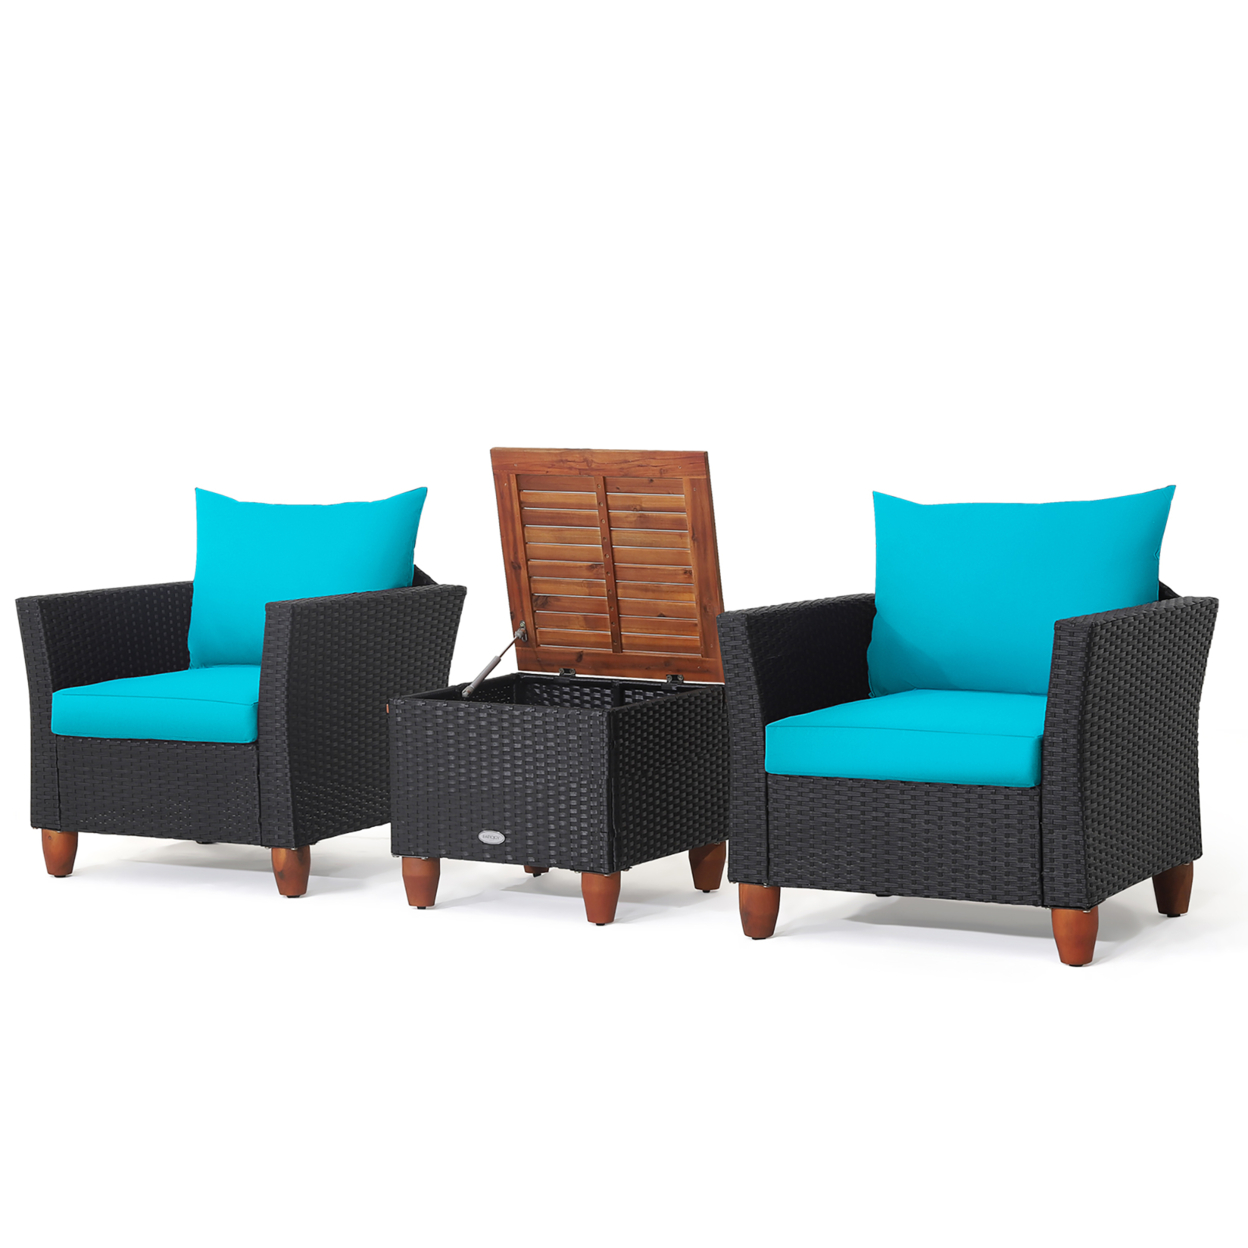 3PCS Patio Rattan Conversation Set Outdoor Furniture Set W/ Cushions - Turquoise